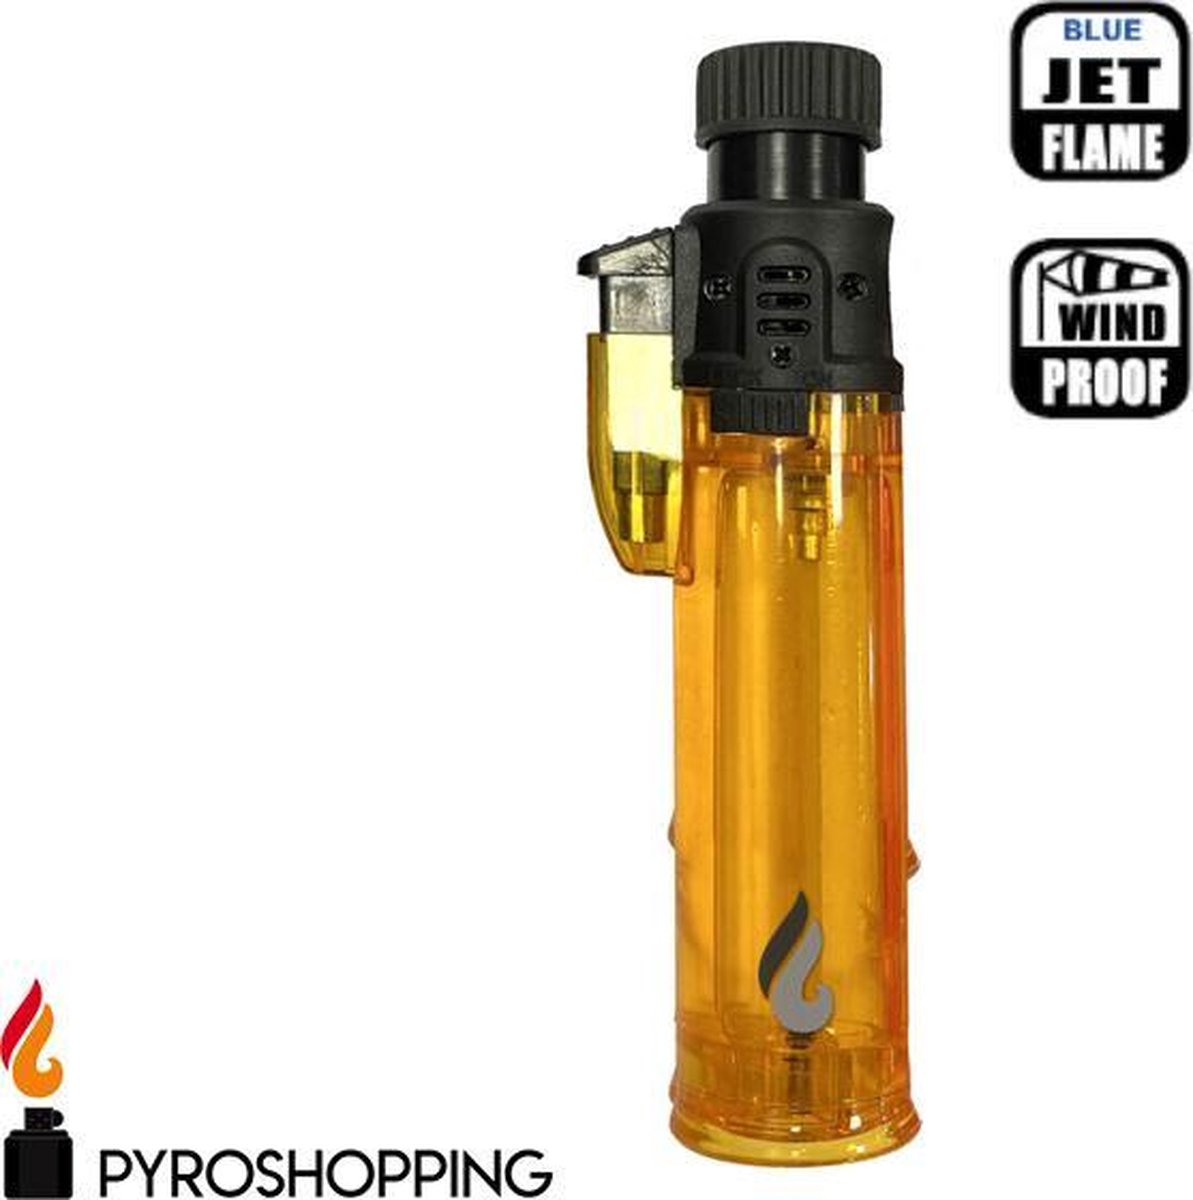 Pyroshopping PYROBURN EXTRA LARGE aansteker voor o.a. vuurwerk – jetflame  torch | bol.com